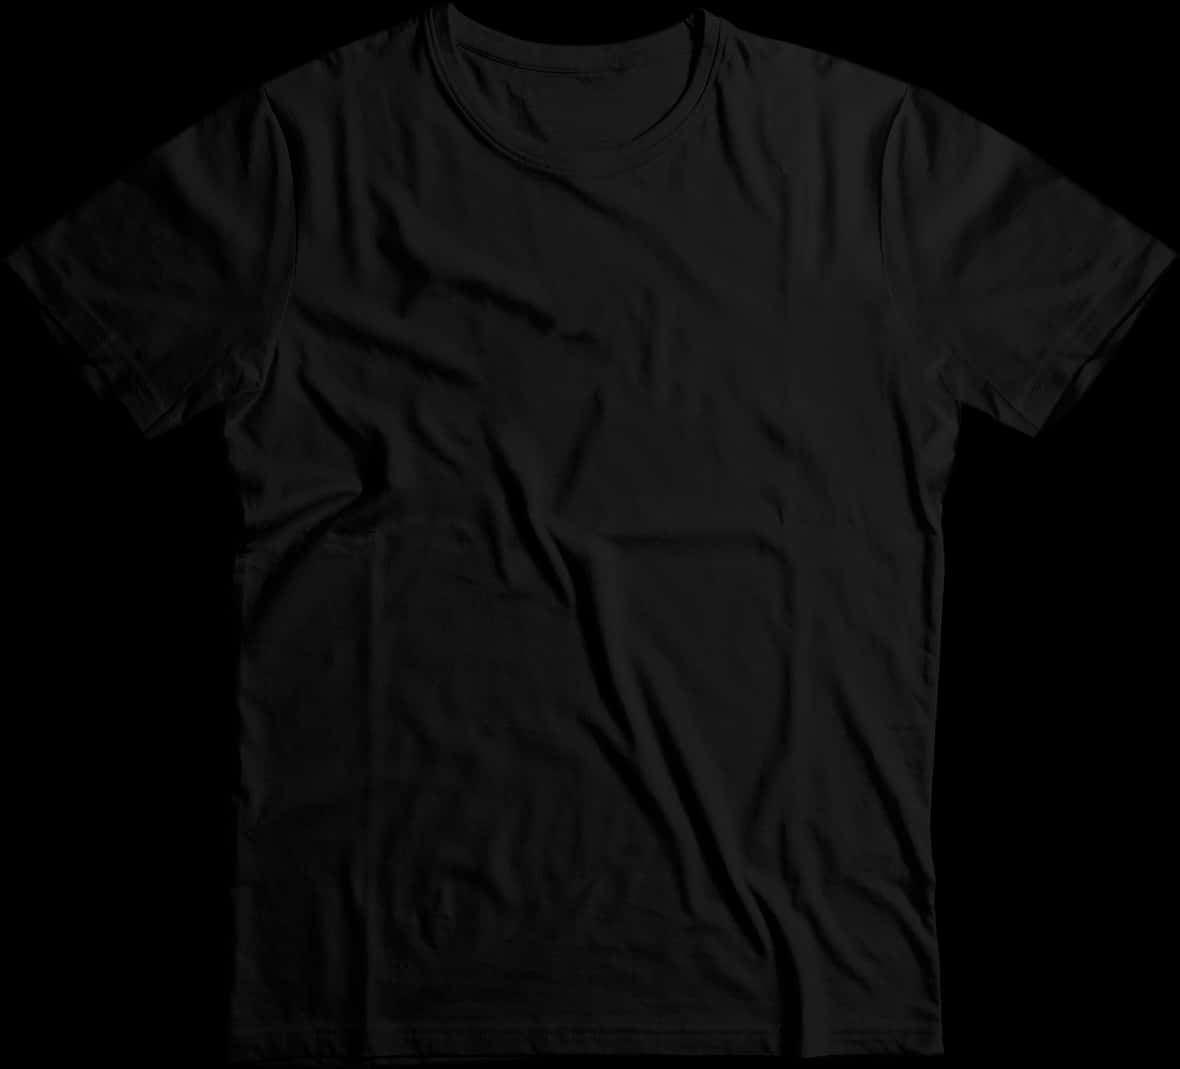 A Black T-shirt On A Black Background